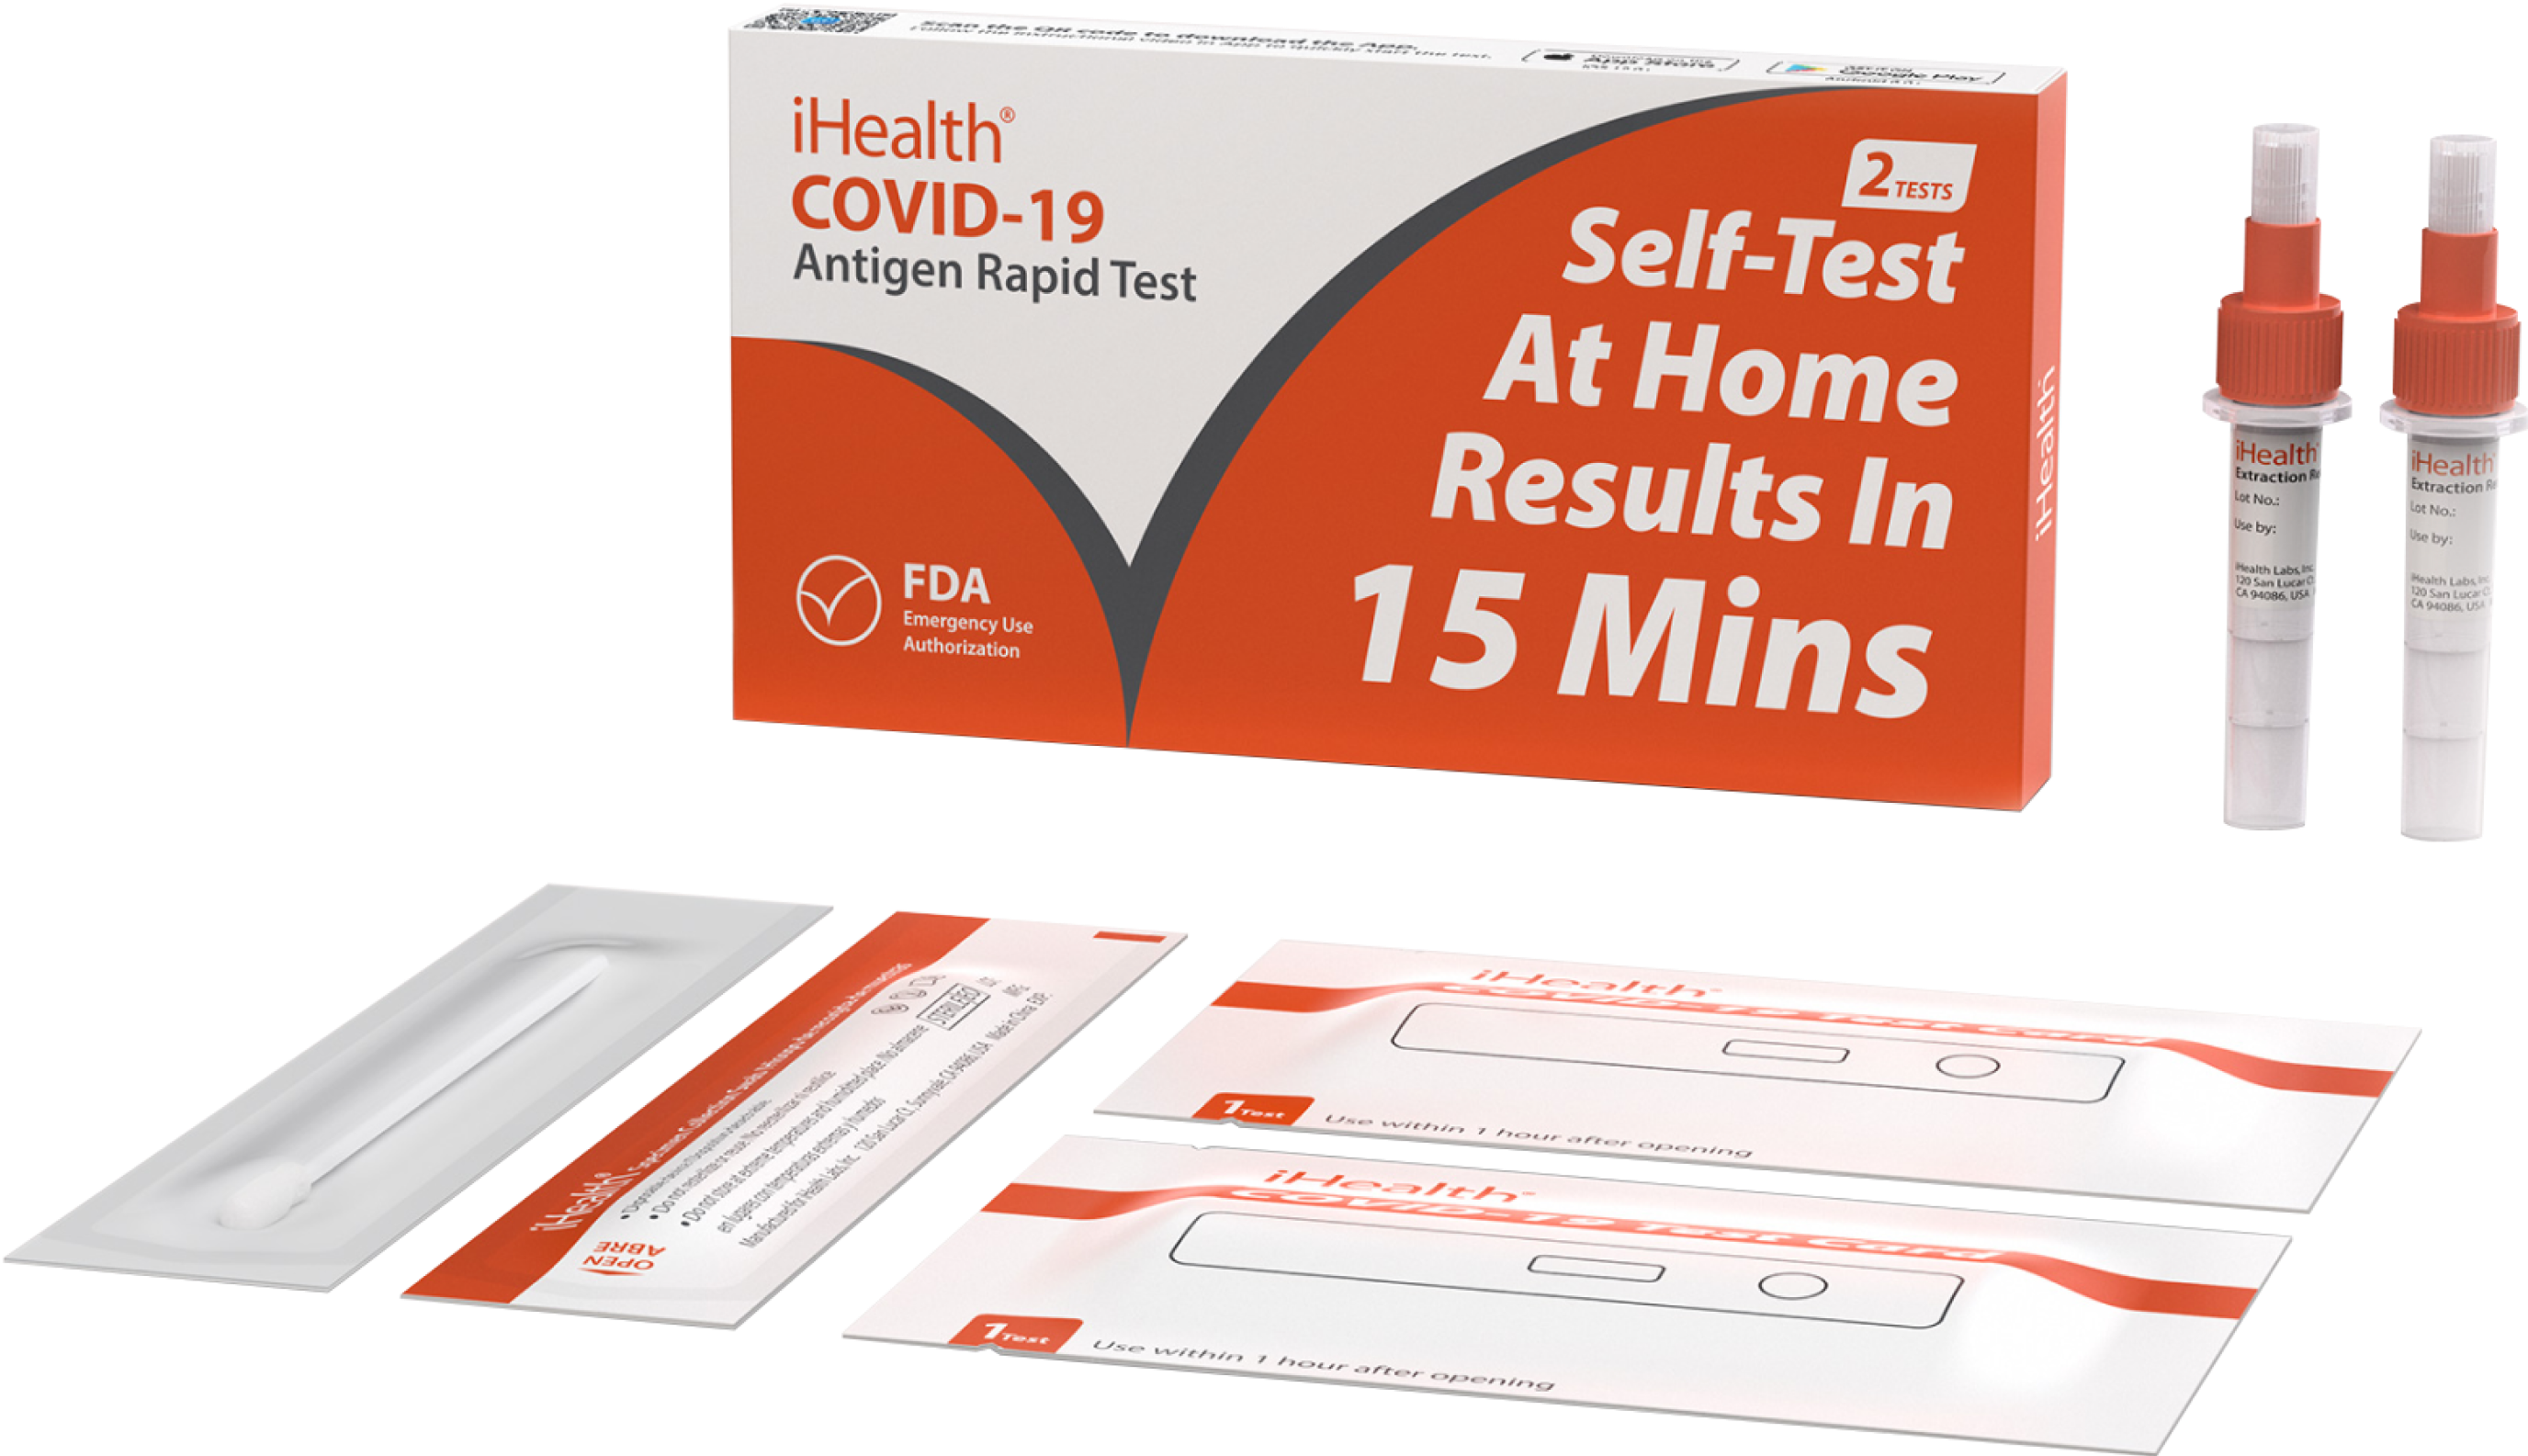  iHealth COVID-19 Antigen Rapid Test, 1 Pack, 2 Tests